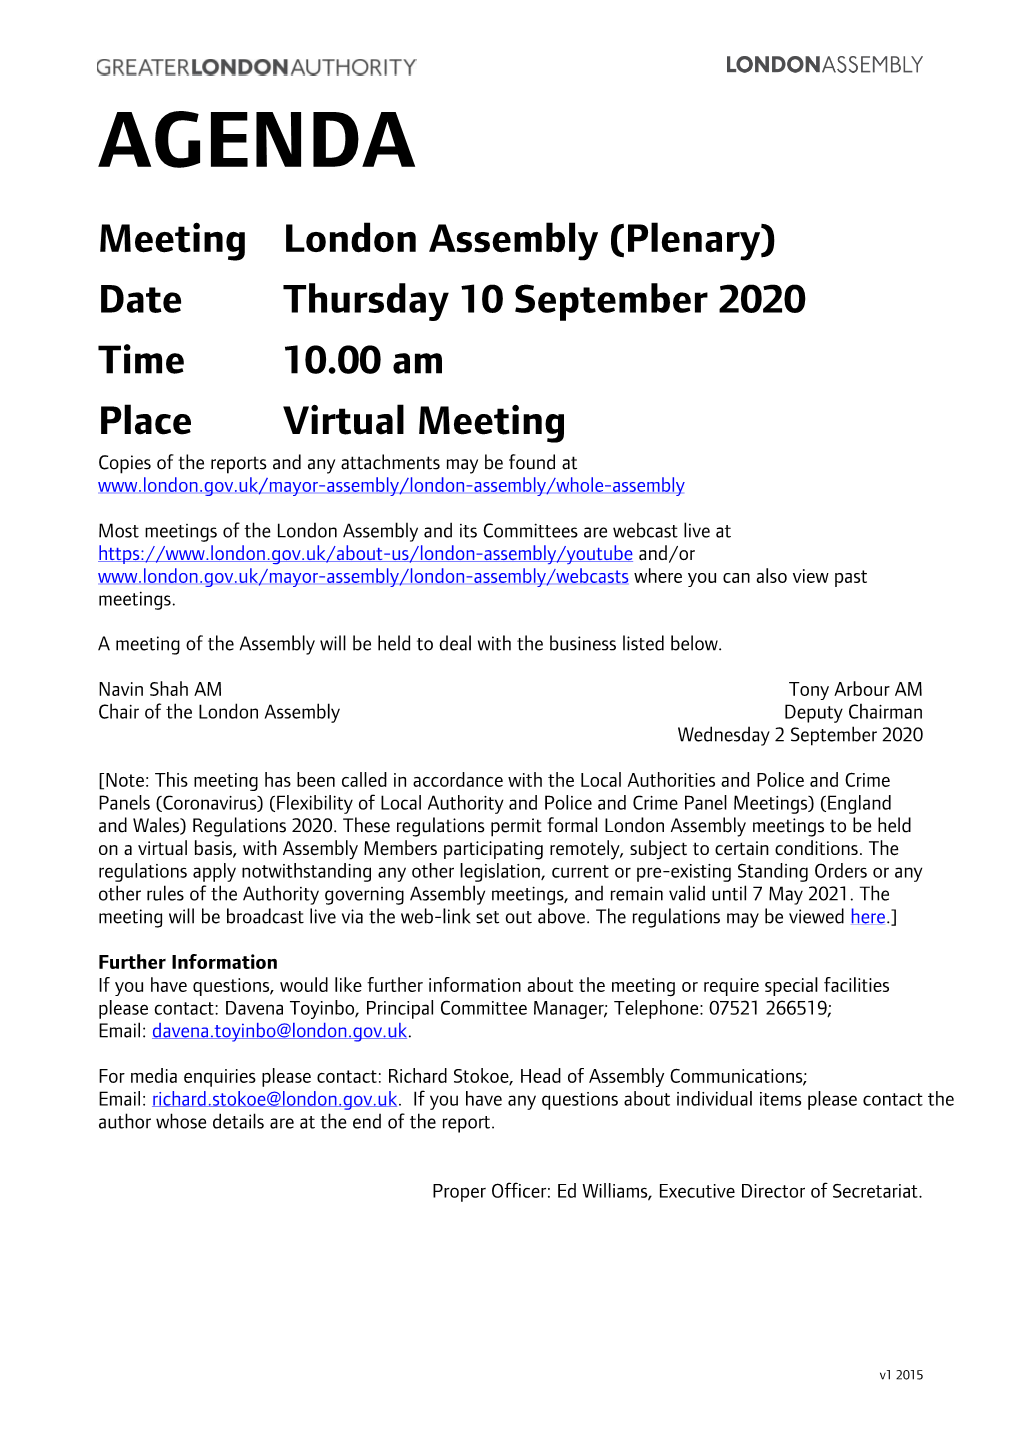 Public Pack)Agenda Document for London Assembly (Plenary